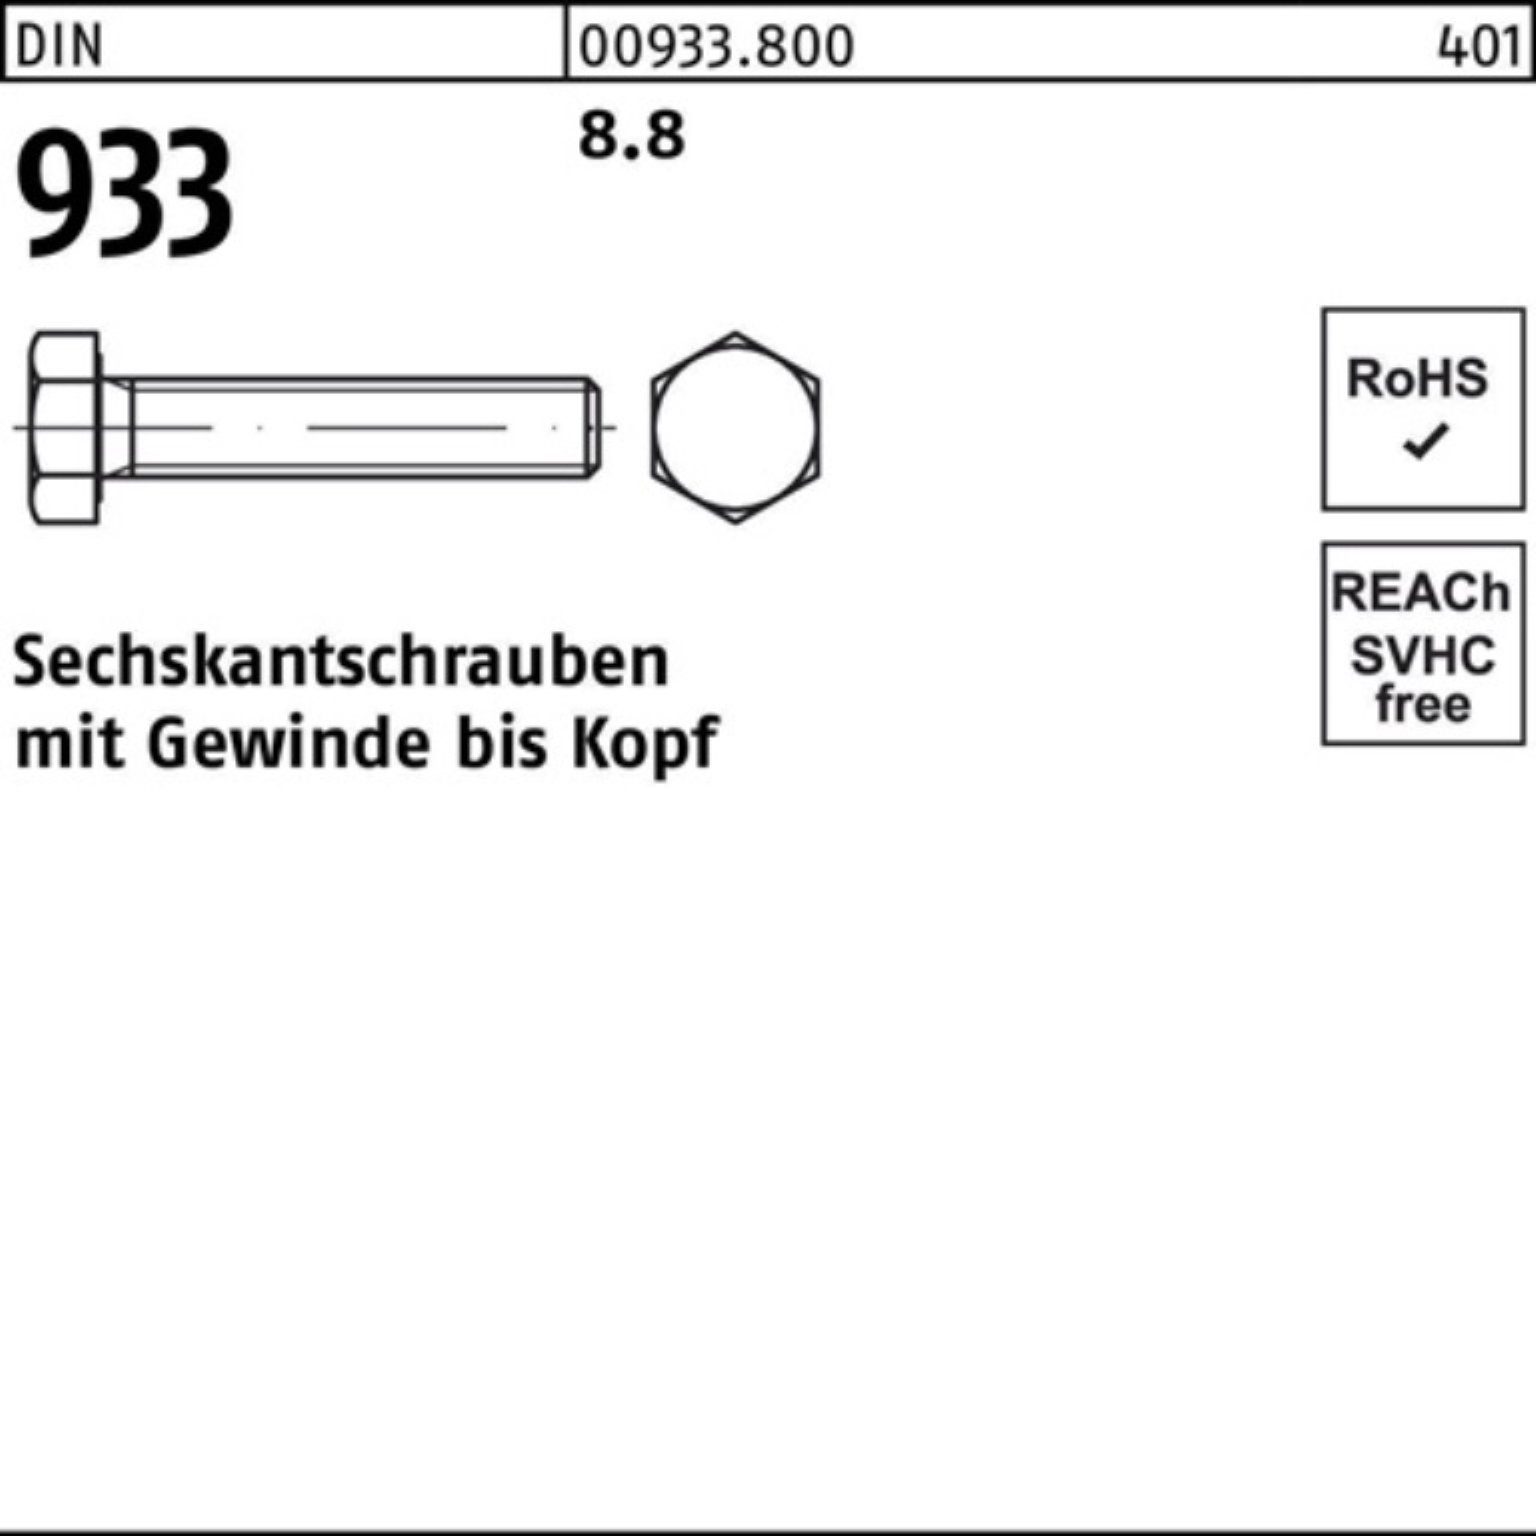 Vollendetheit Reyher Sechskantschraube 933 933 100er 1 Stück M39x Pack DIN DIN Sechskantschraube 200 8.8 VG